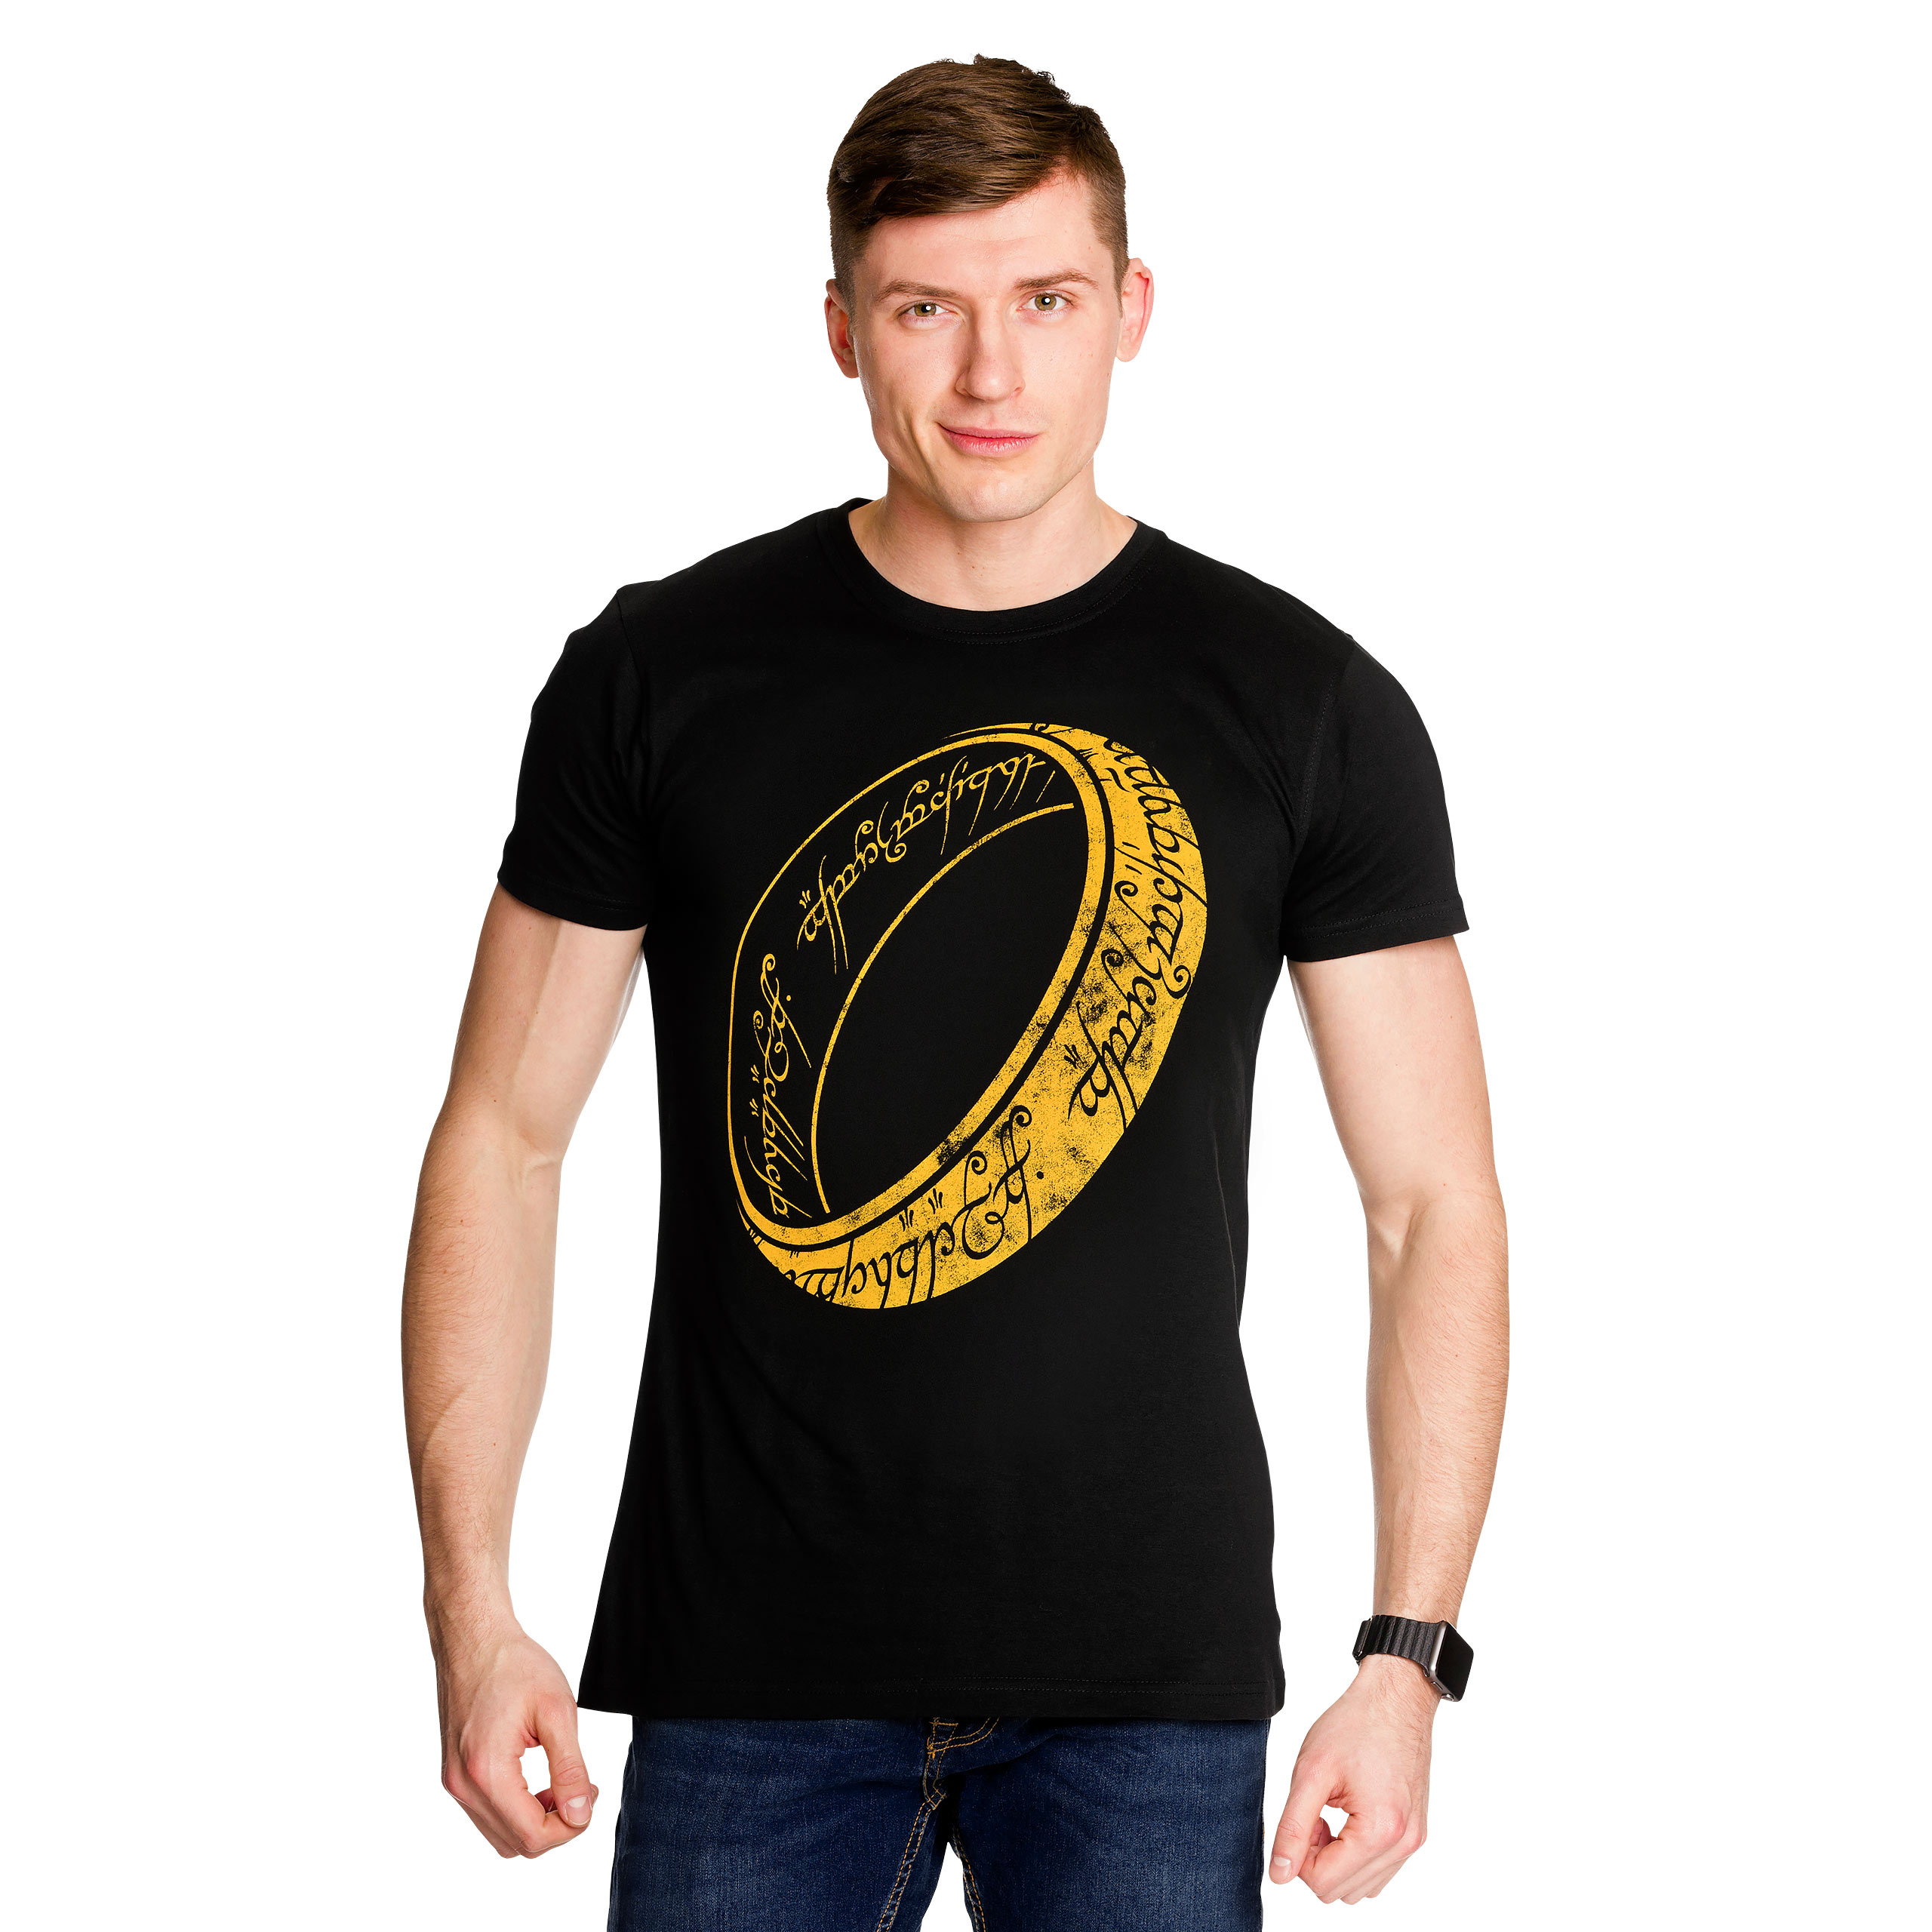 Herr der Ringe - One Ring to Rule T-Shirt schwarz